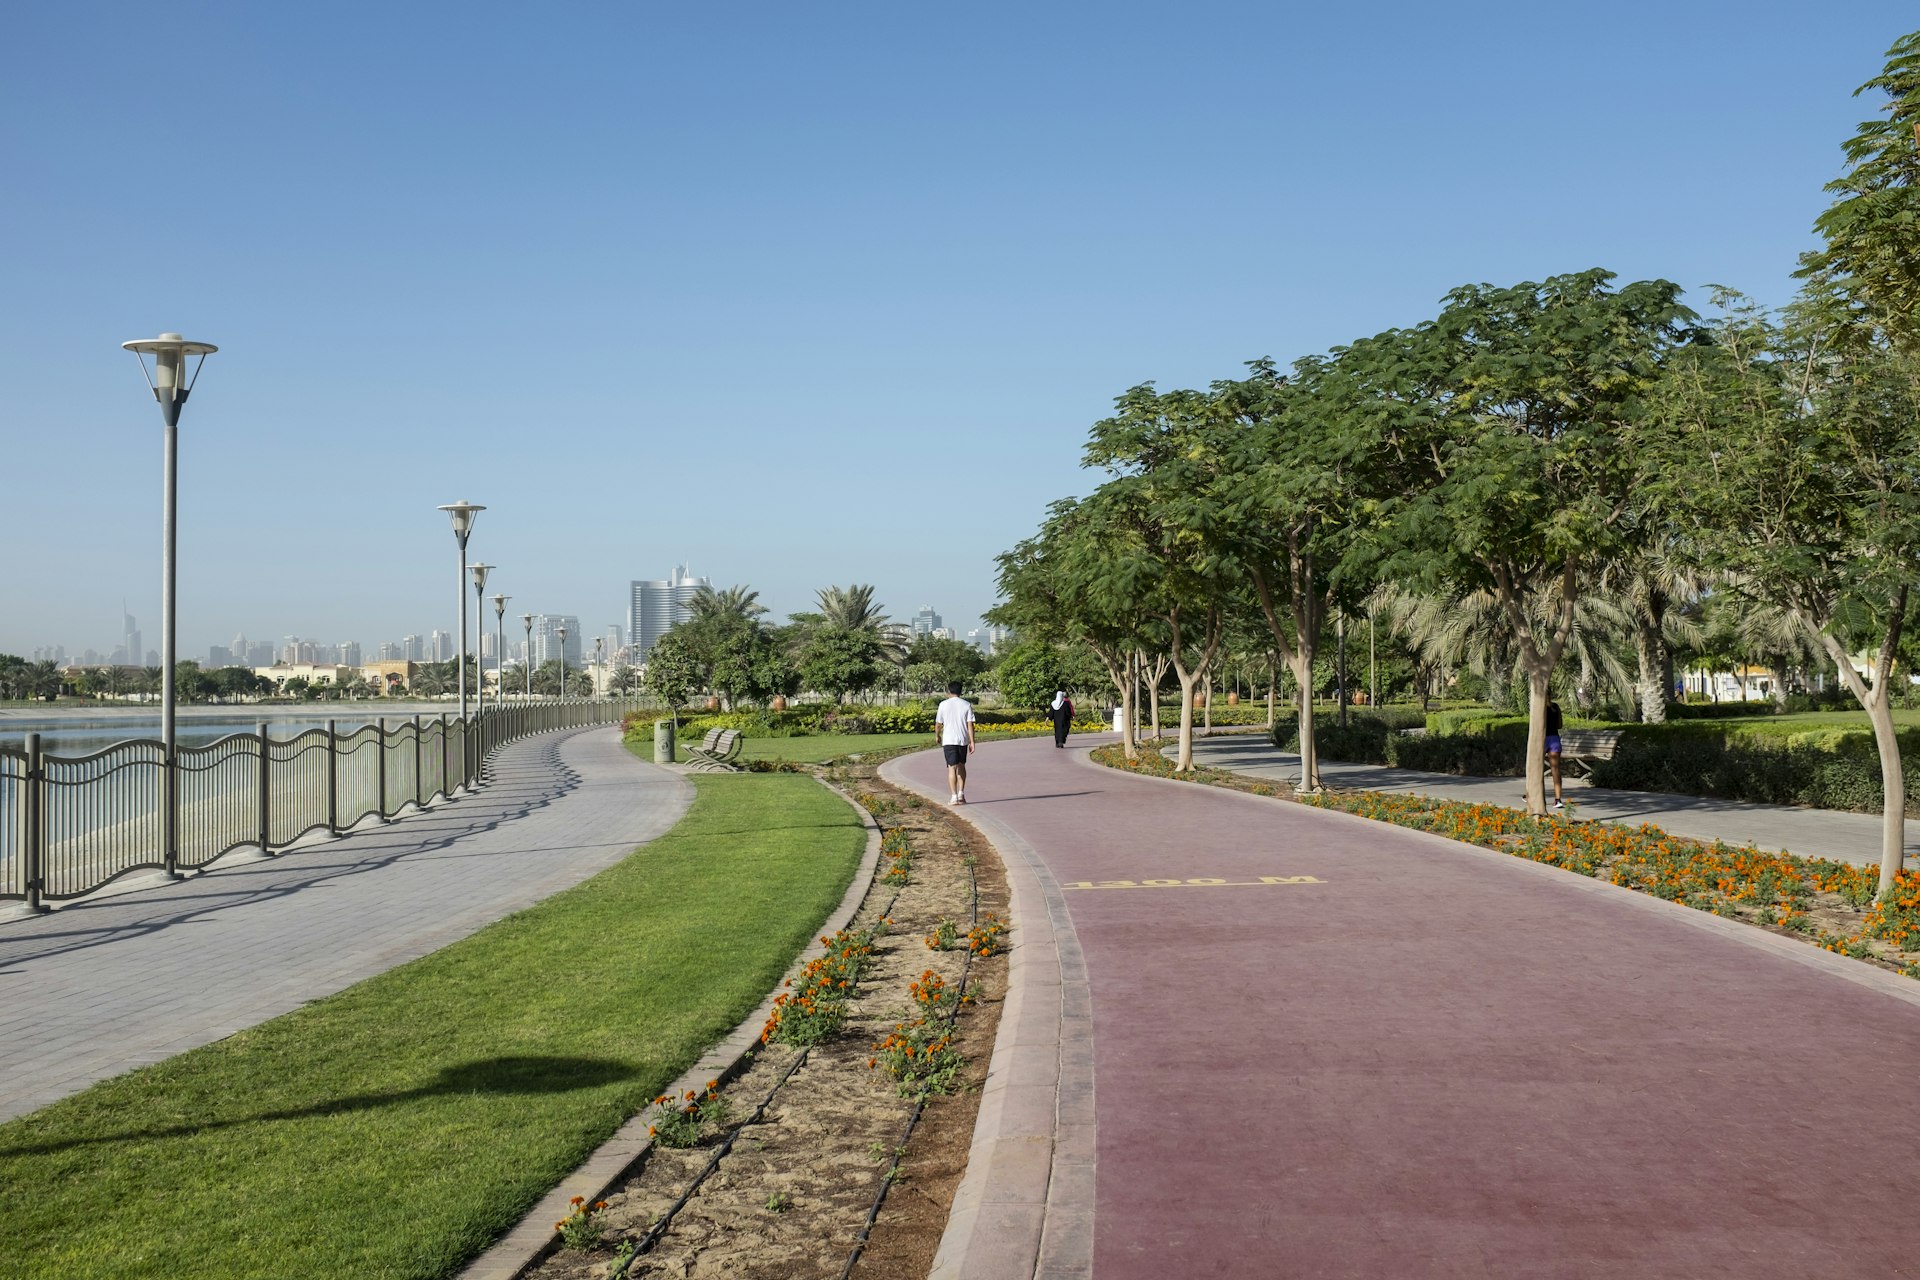 Running track at Al Barsha Pond Park in Dubai, United Arab Emirates